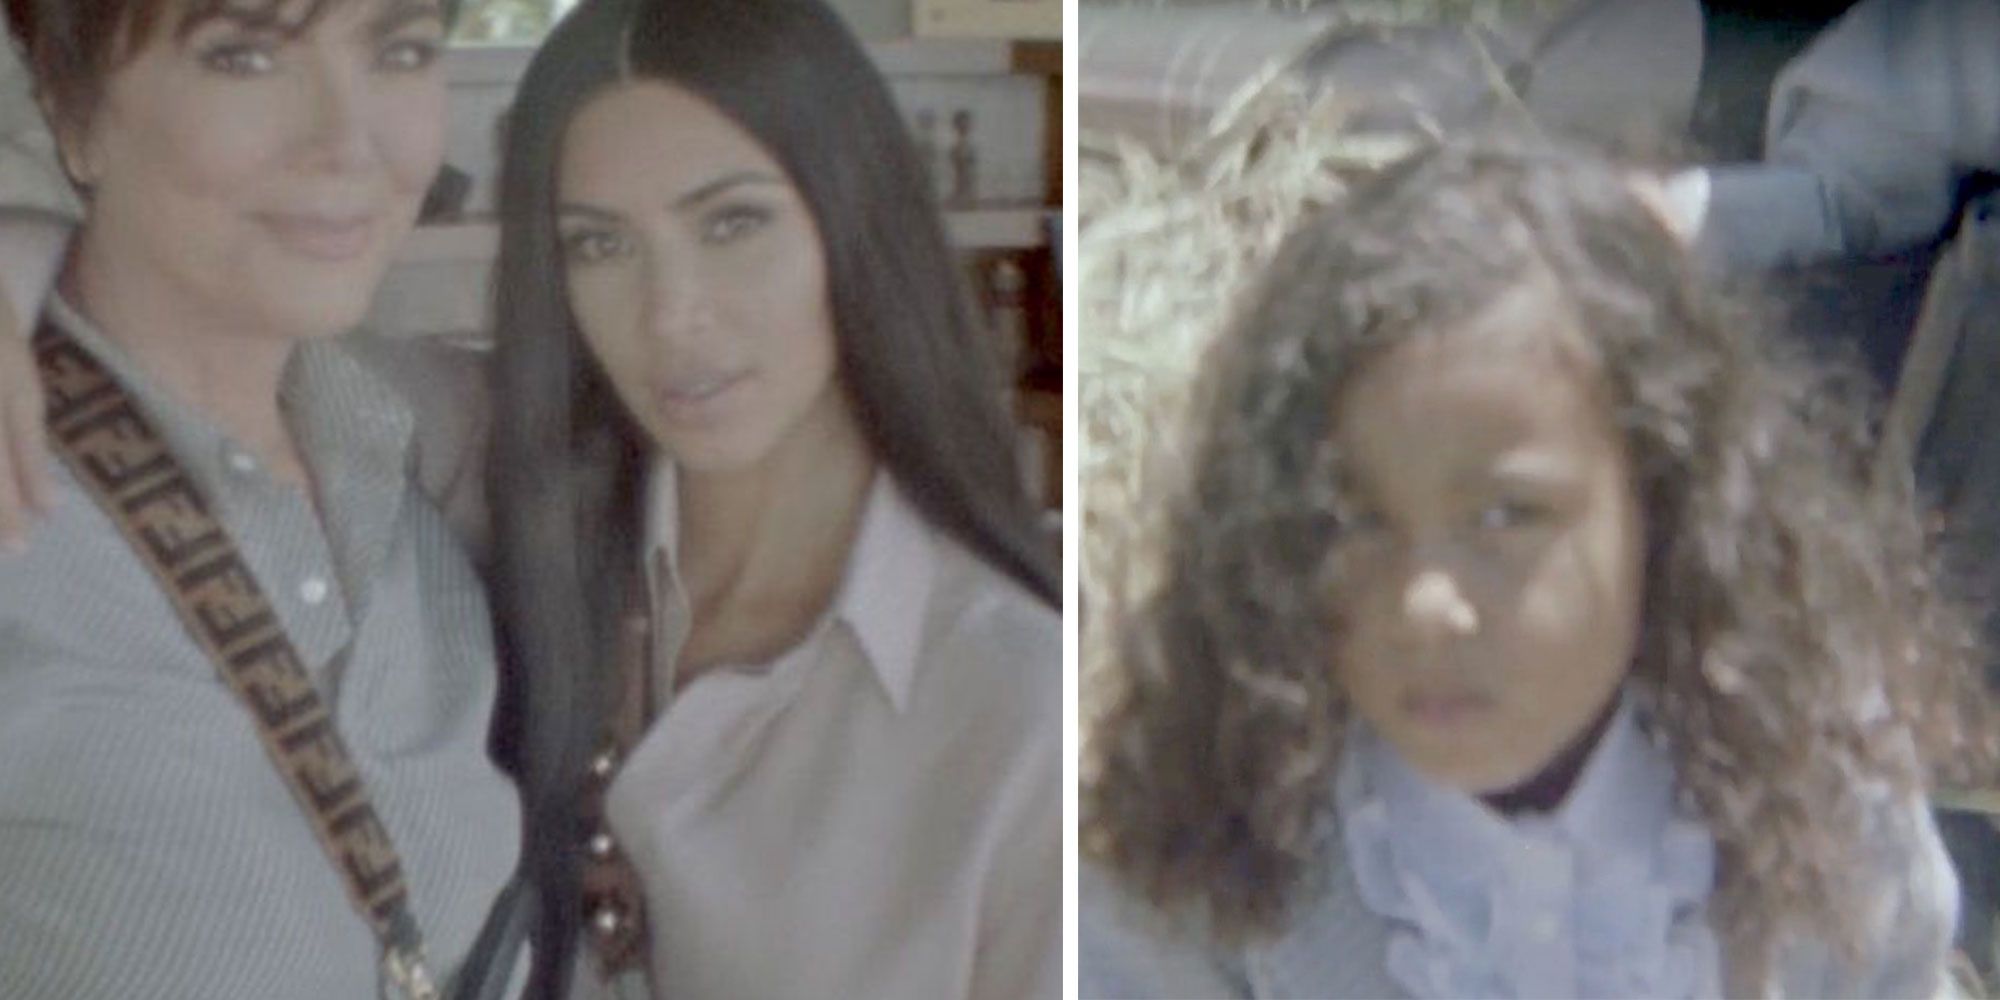 Kim Kardashian Says North West Will Get Chanel Purse in Kris